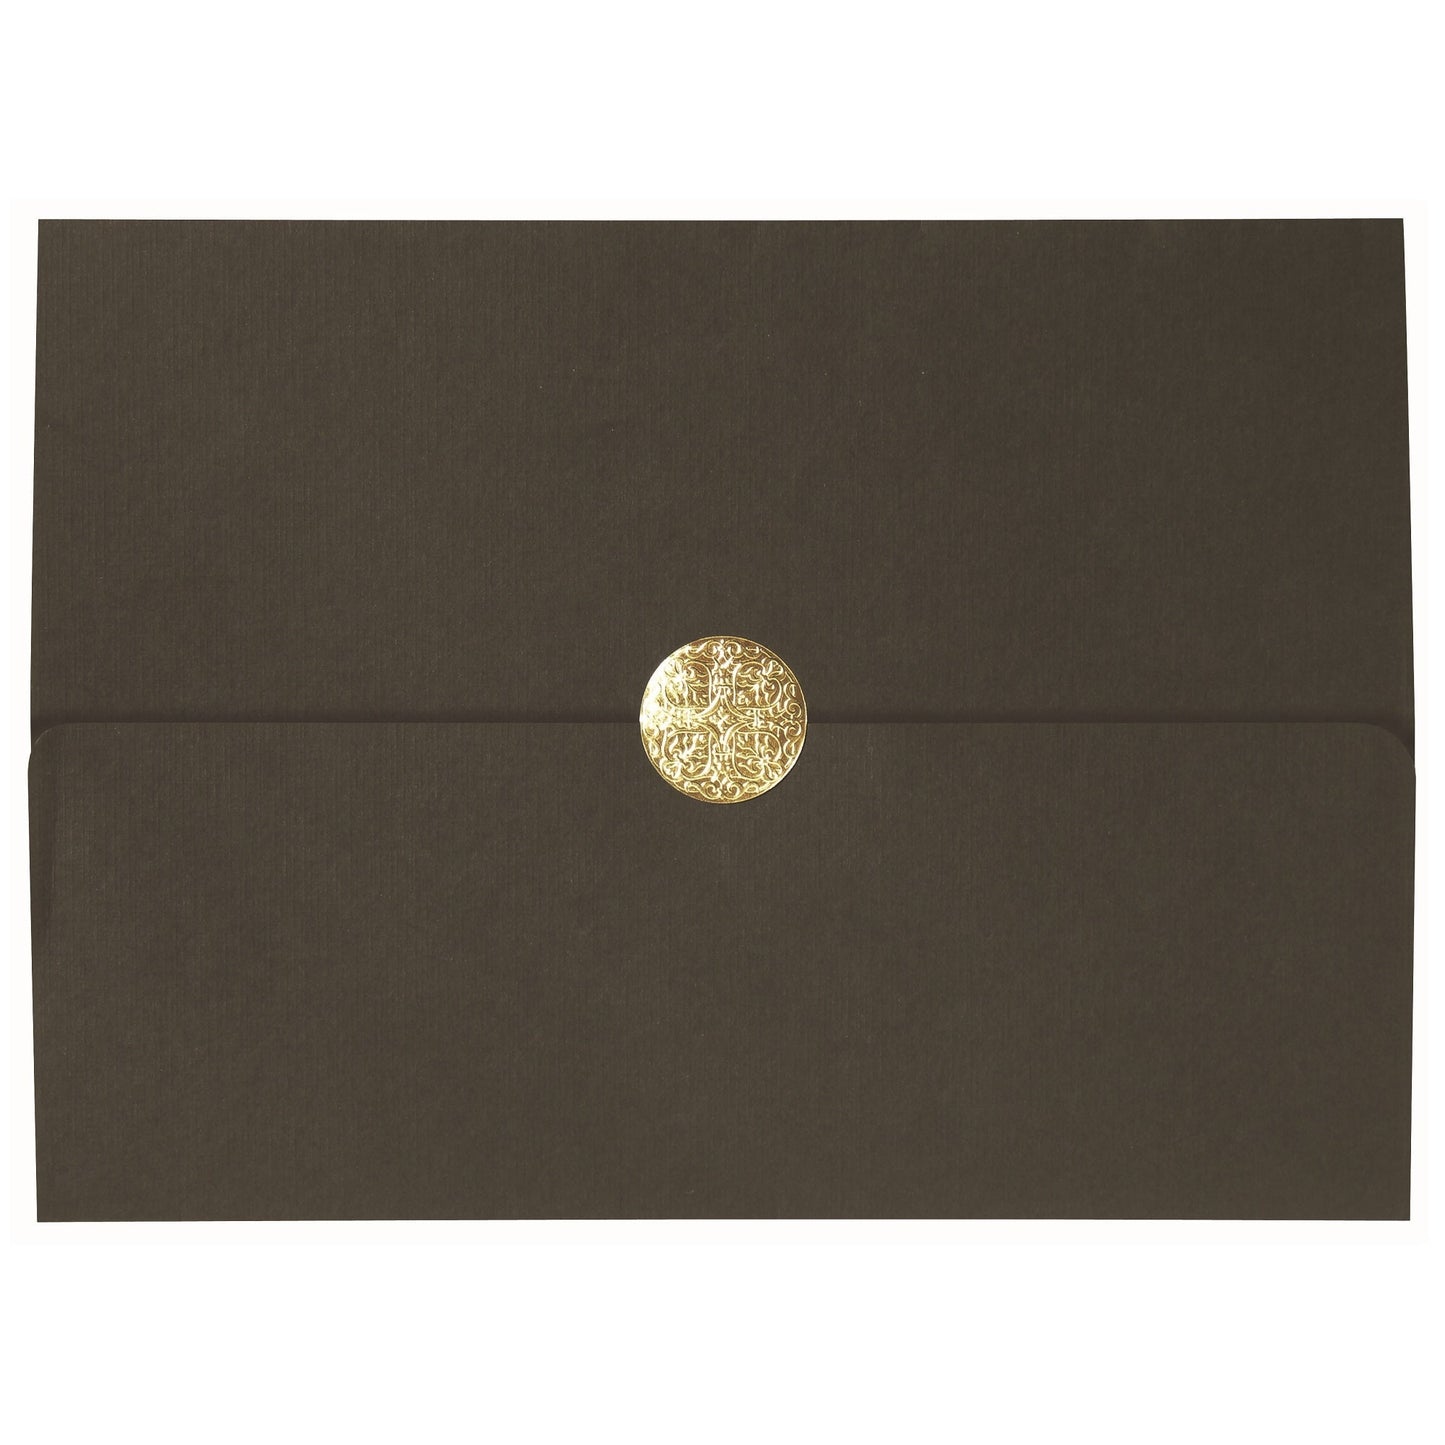 St. James® Elite™ Medallion Fold Certificate Holders, Black Linen with Gold Medallion, Pack of 5